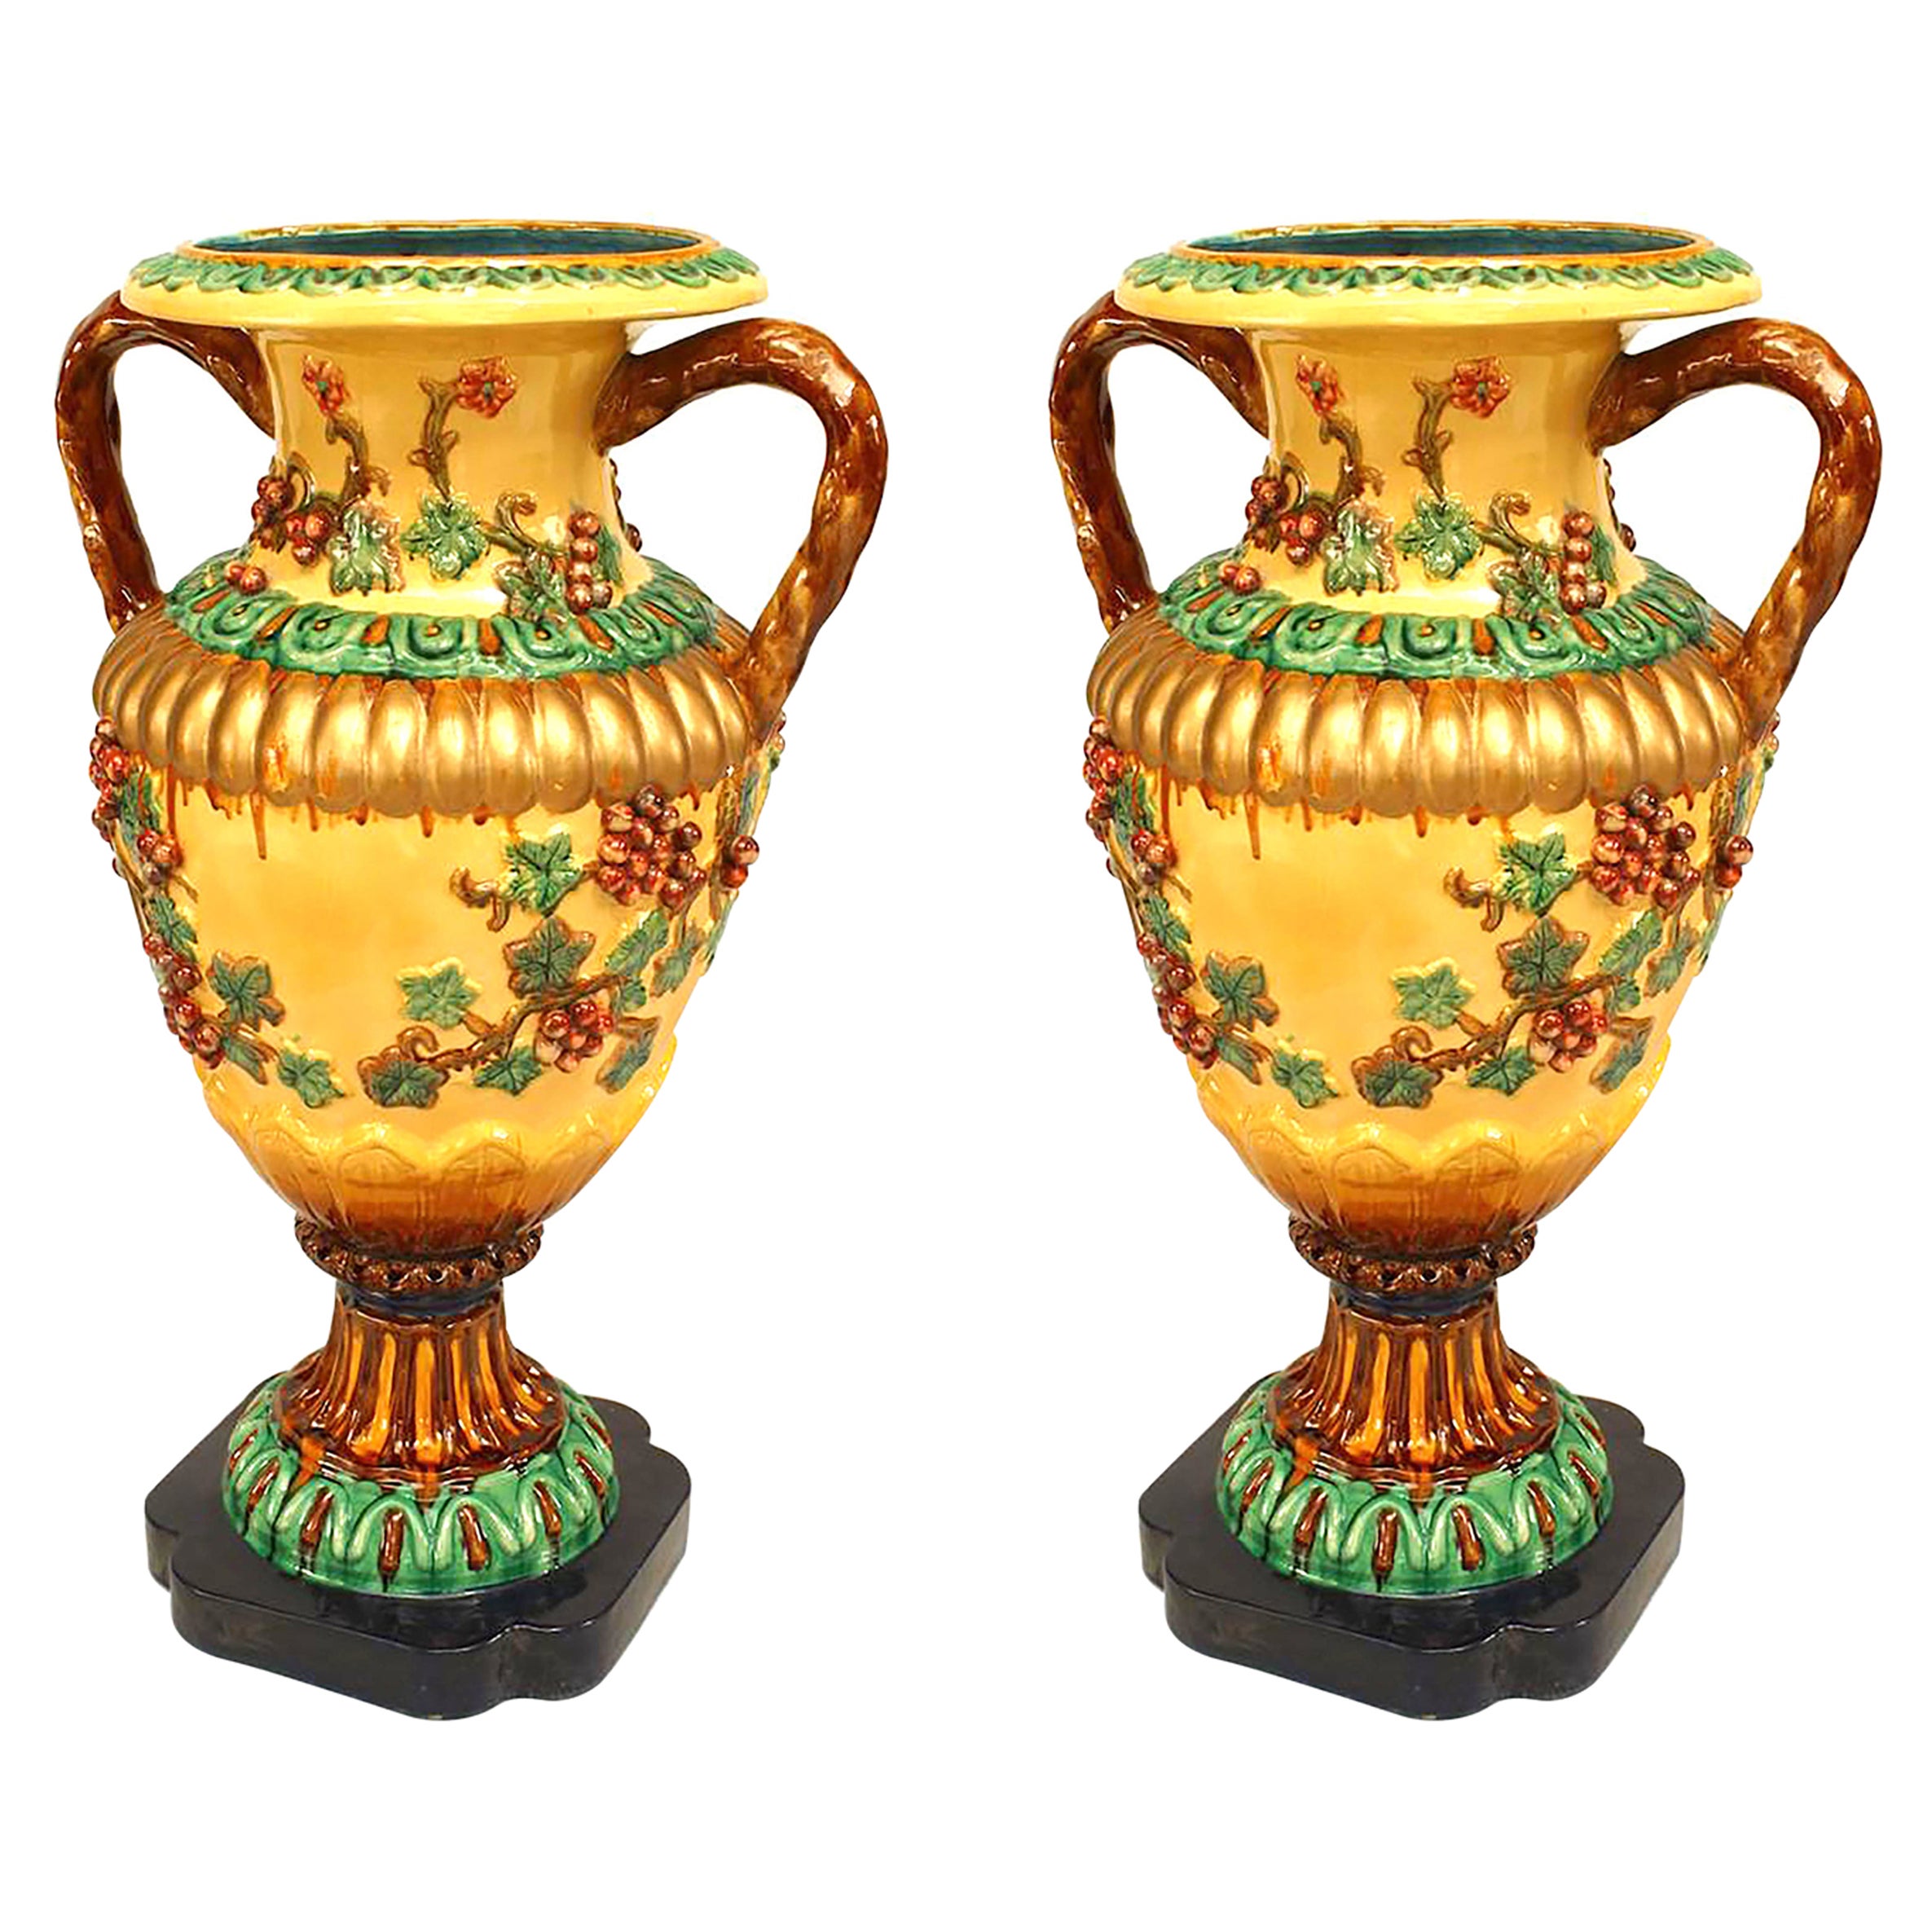 Pair of Italian NeoClassic Style Majolica Porcelain Floor Vases